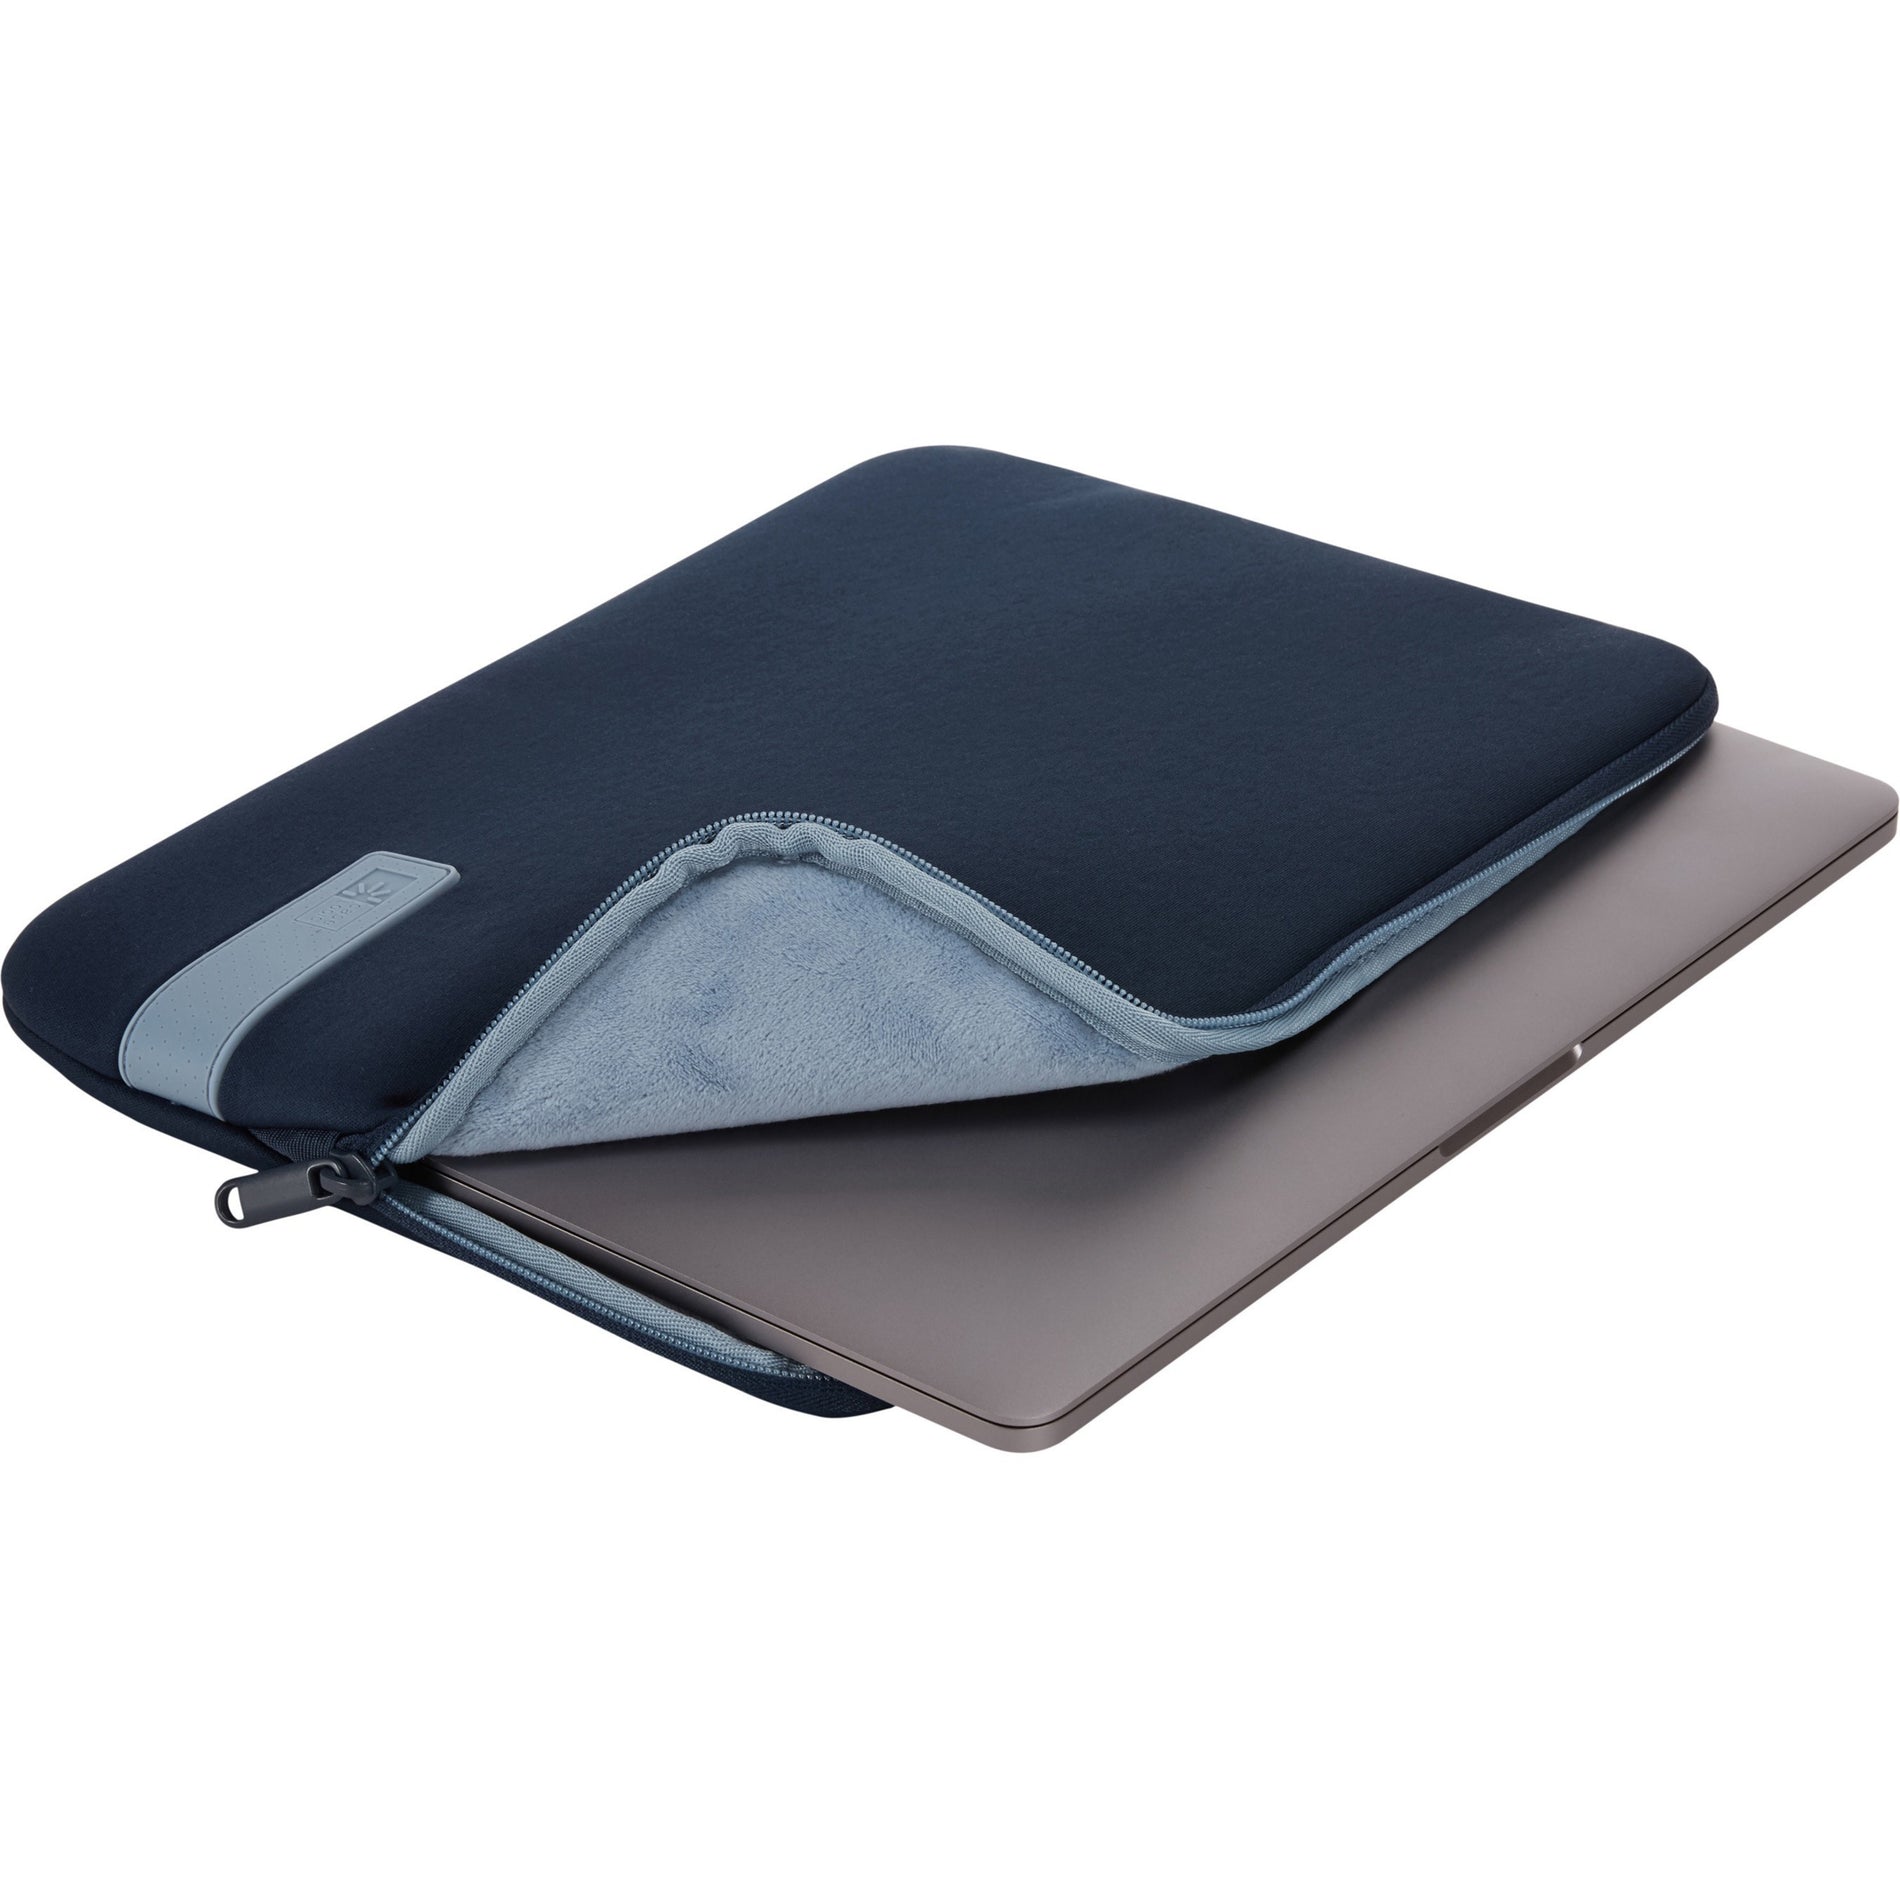 Case Logic 3203956 Reflect 13" MacBook Pro Sleeve, Dark Blue Memory Foam Carrying Case